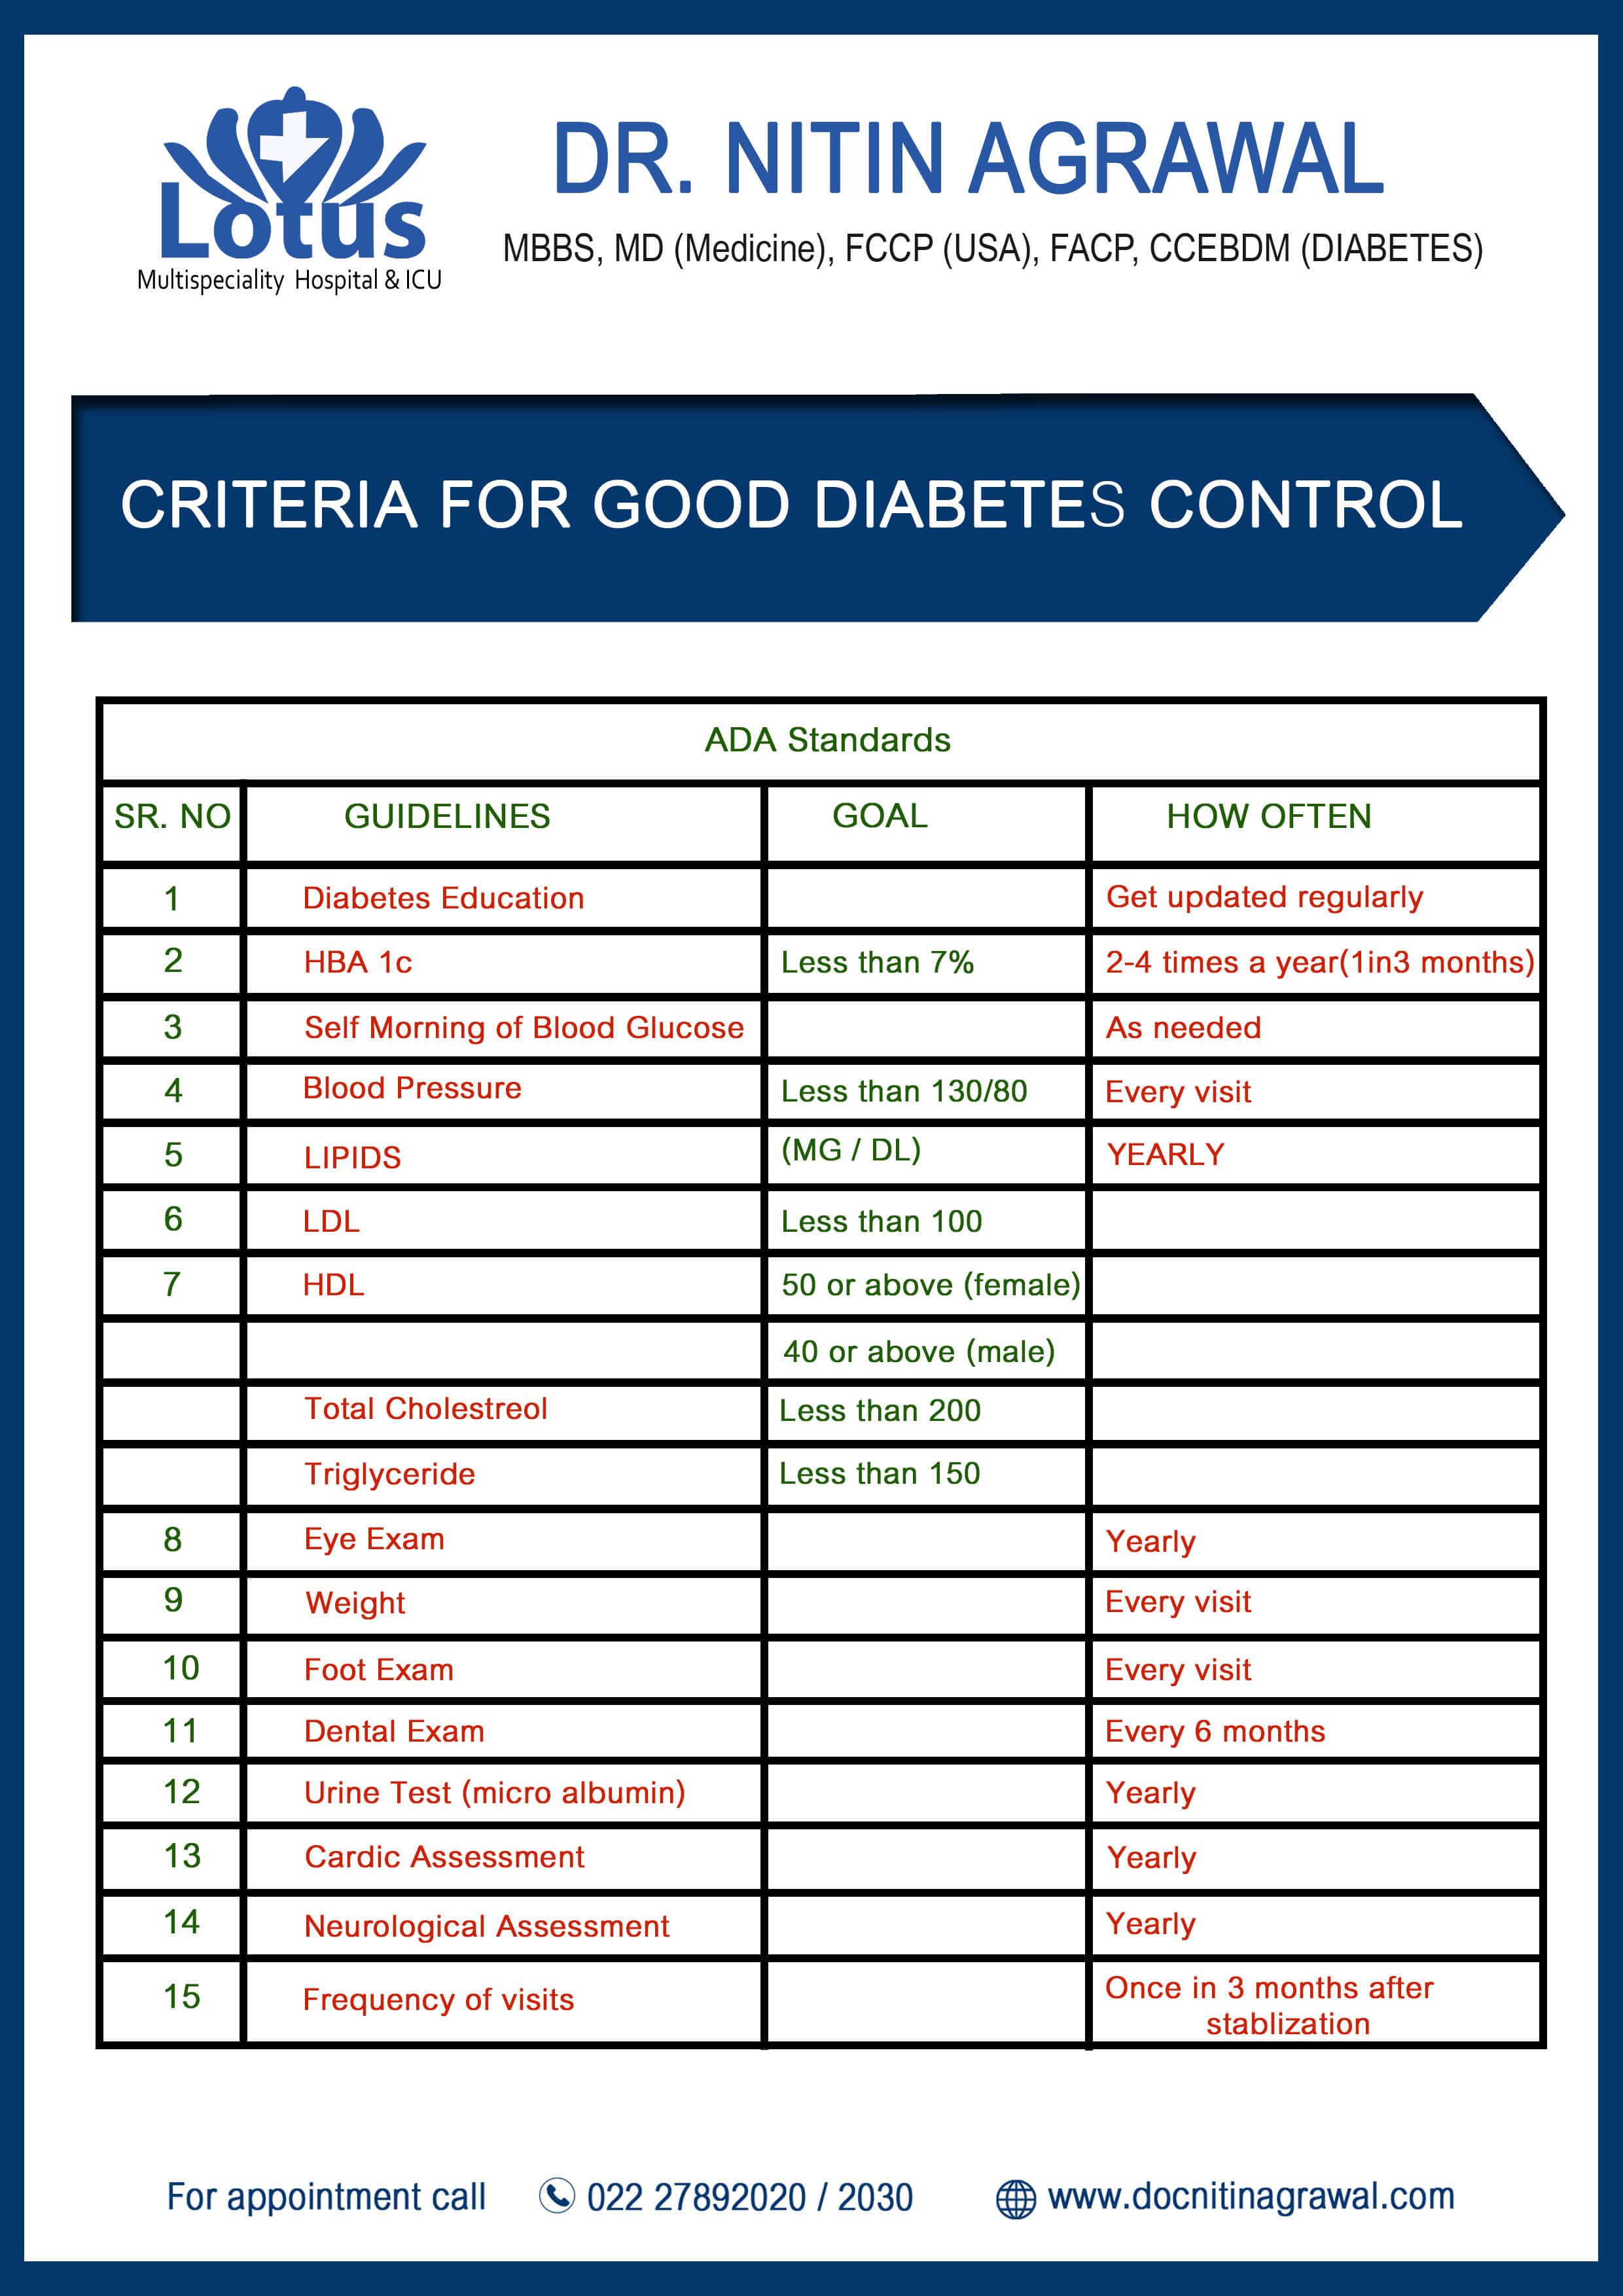 Criteria for good diabetes control chart by Dr. Nitin Agrawal best Cardiologist & Diabetologist at Lotus Health Care & Advanced Diabetes Center in Vashi, Navi Mumbai